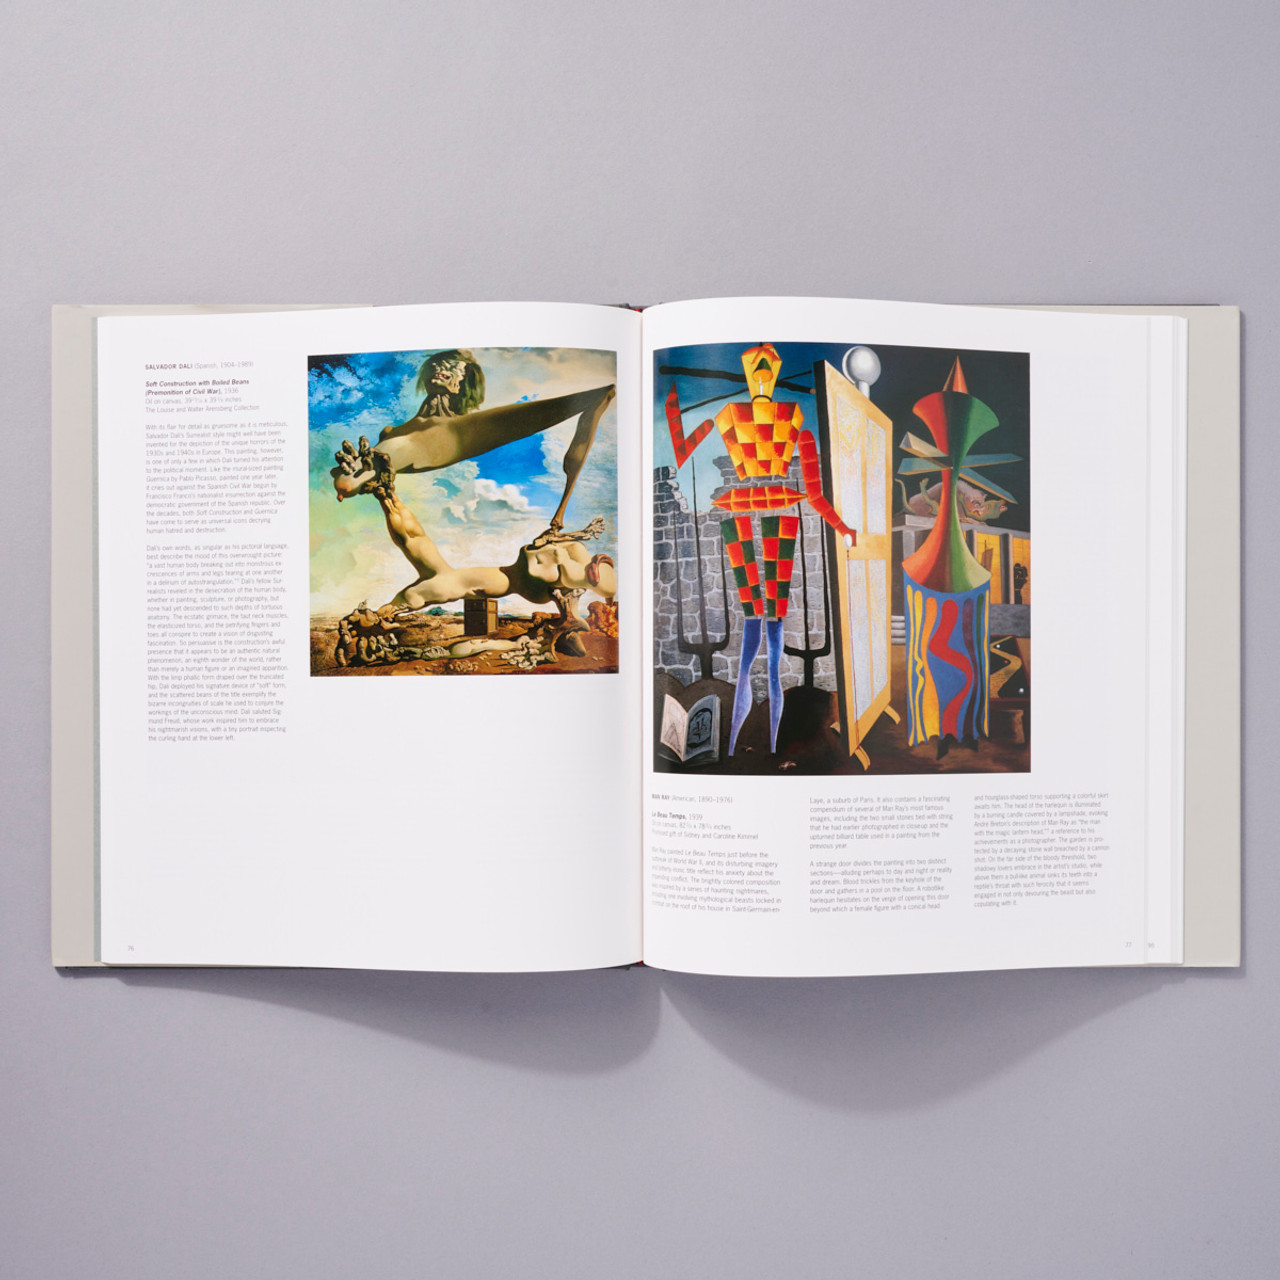 The Art Book by Phaidon Press